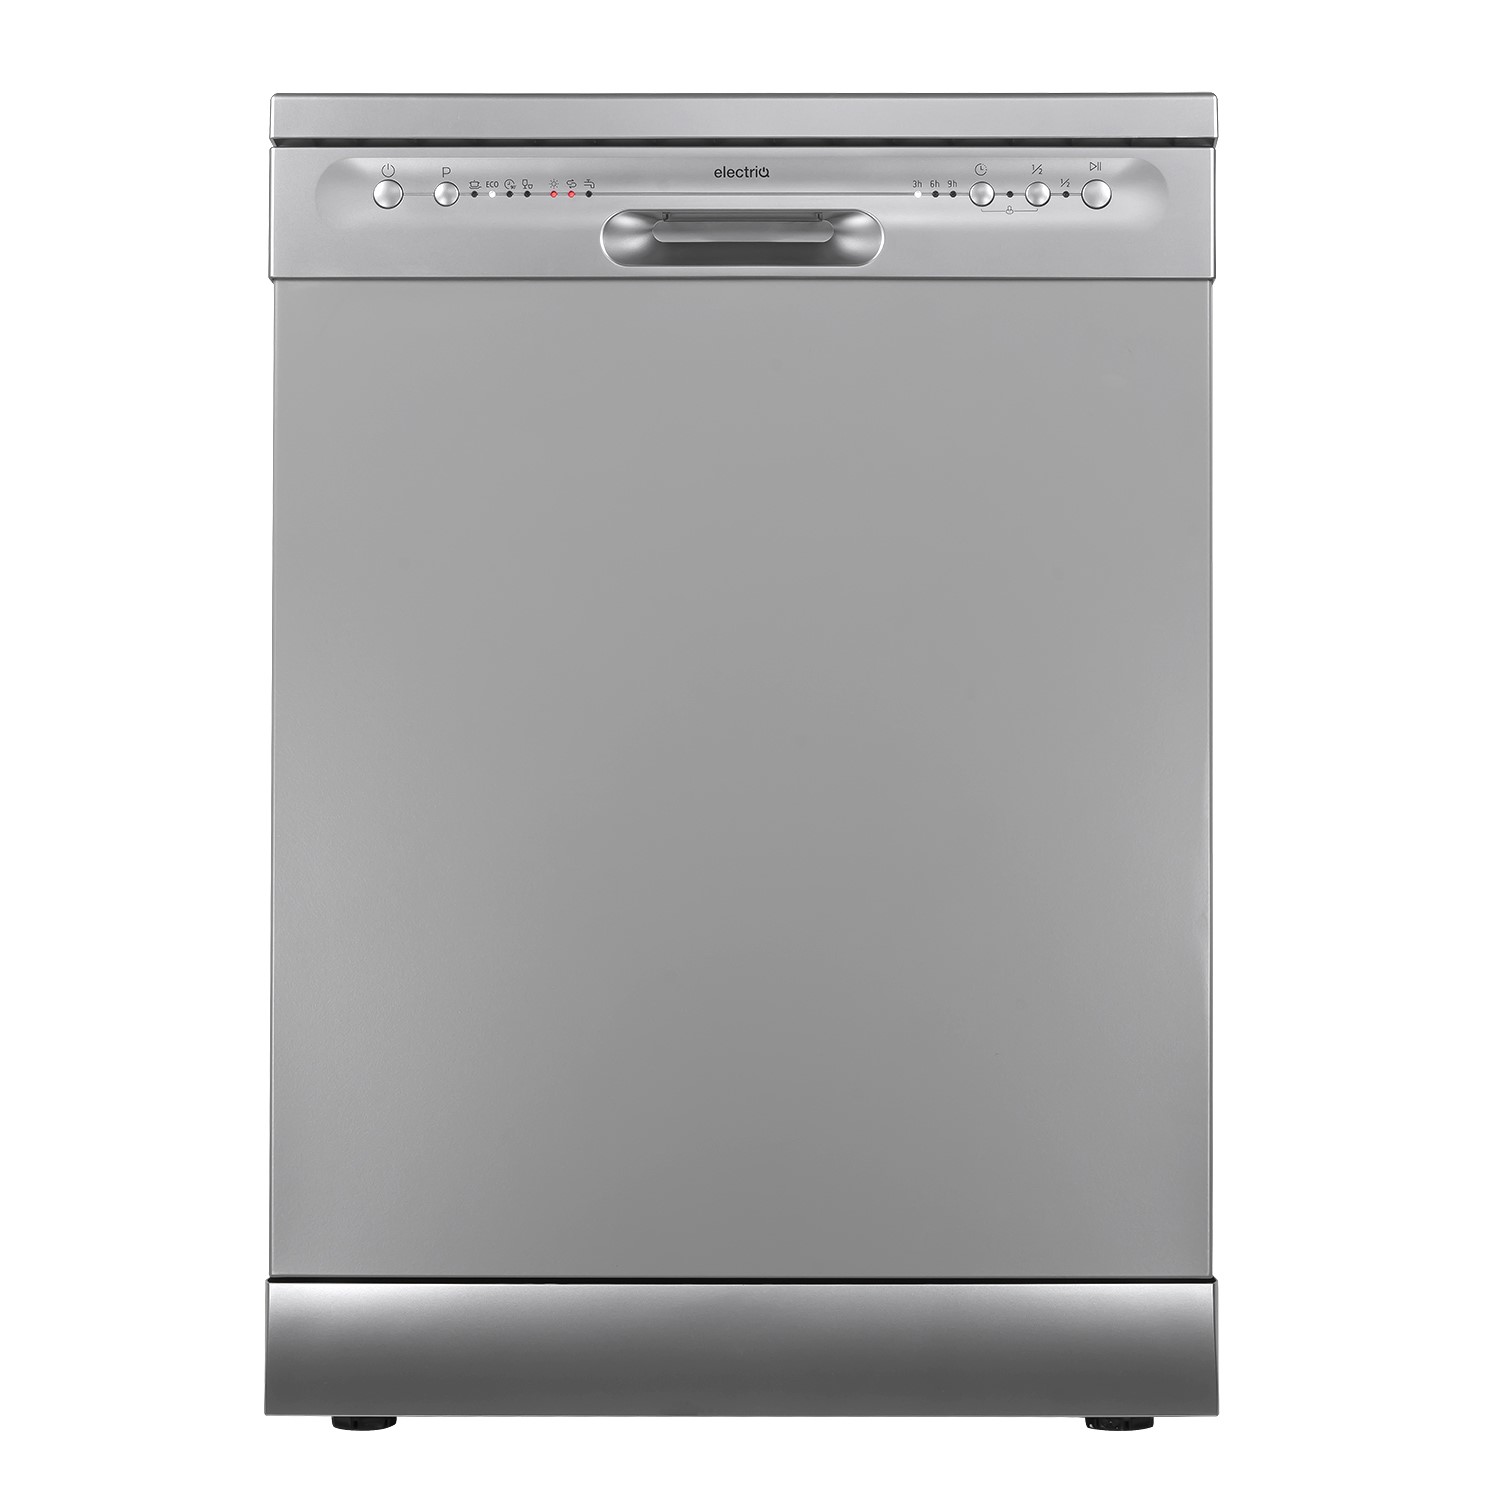 electriQ Freestanding Dishwasher - Silver